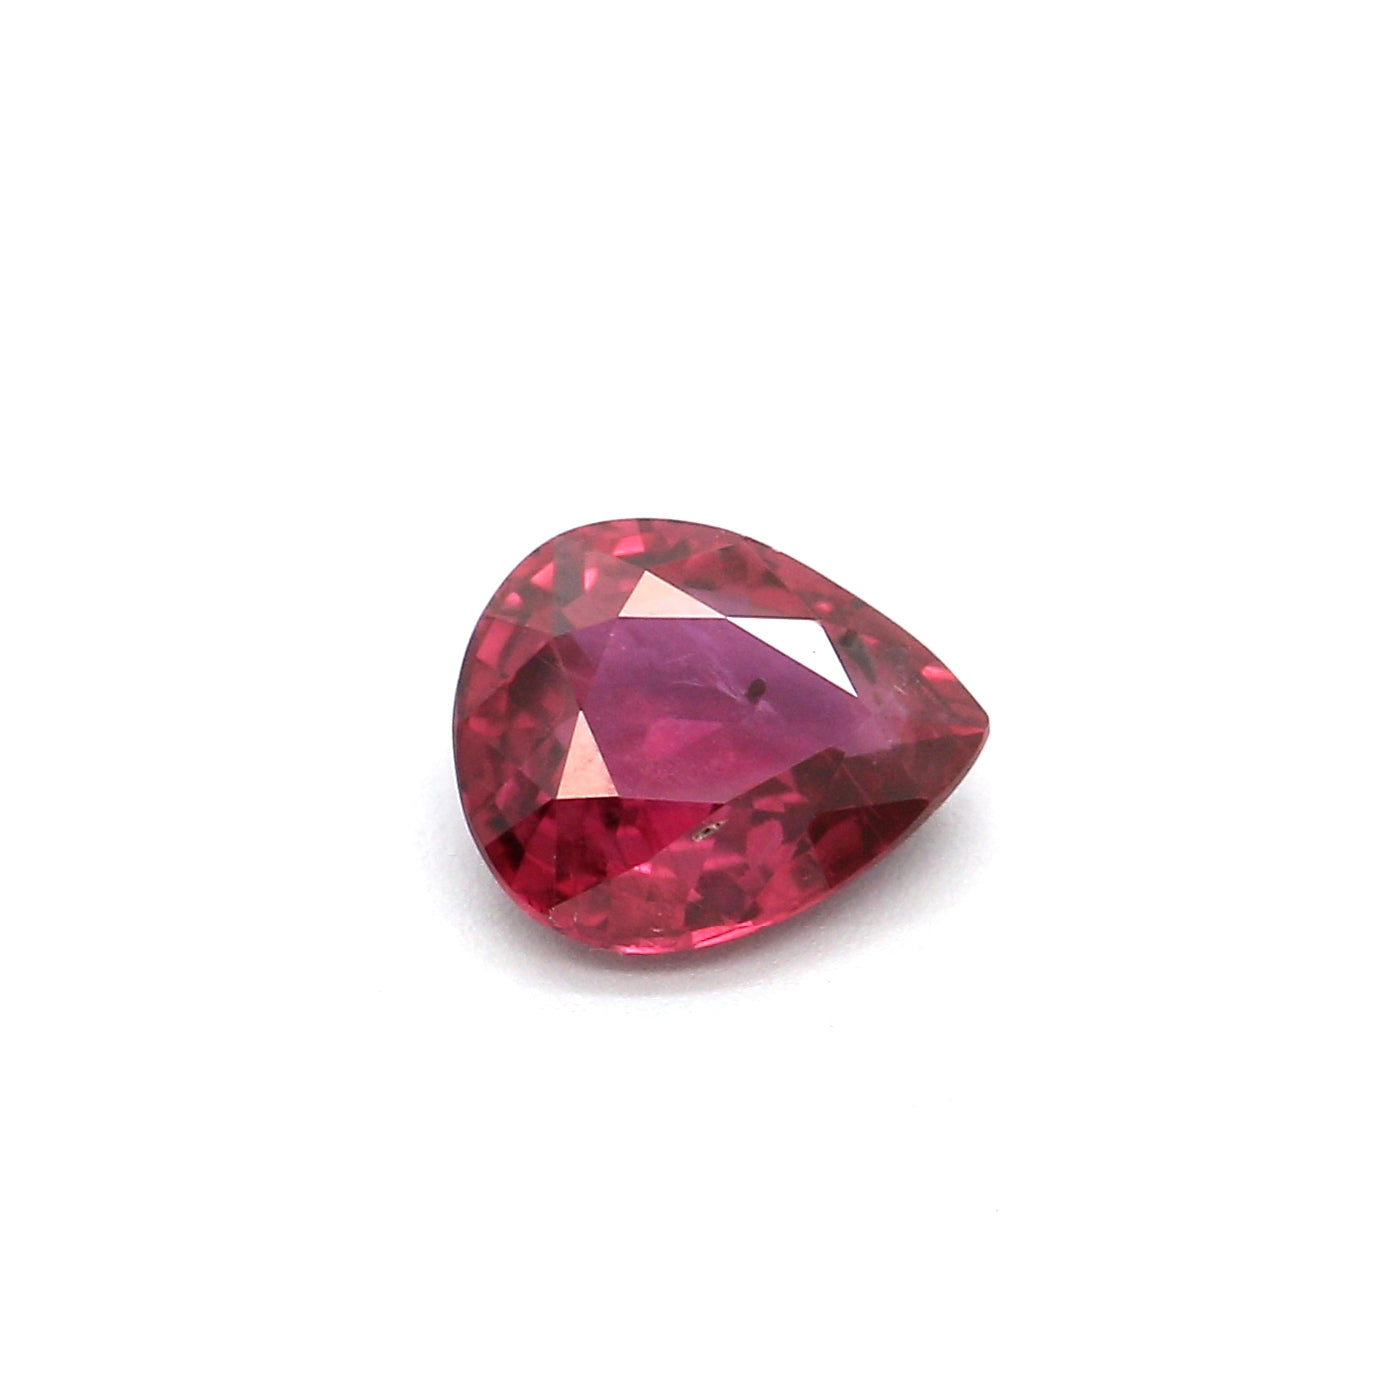 0.60ct Purplish Red, Pear Shape Ruby, Heated, Thailand - 5.92 x 4.93 x 2.49mm